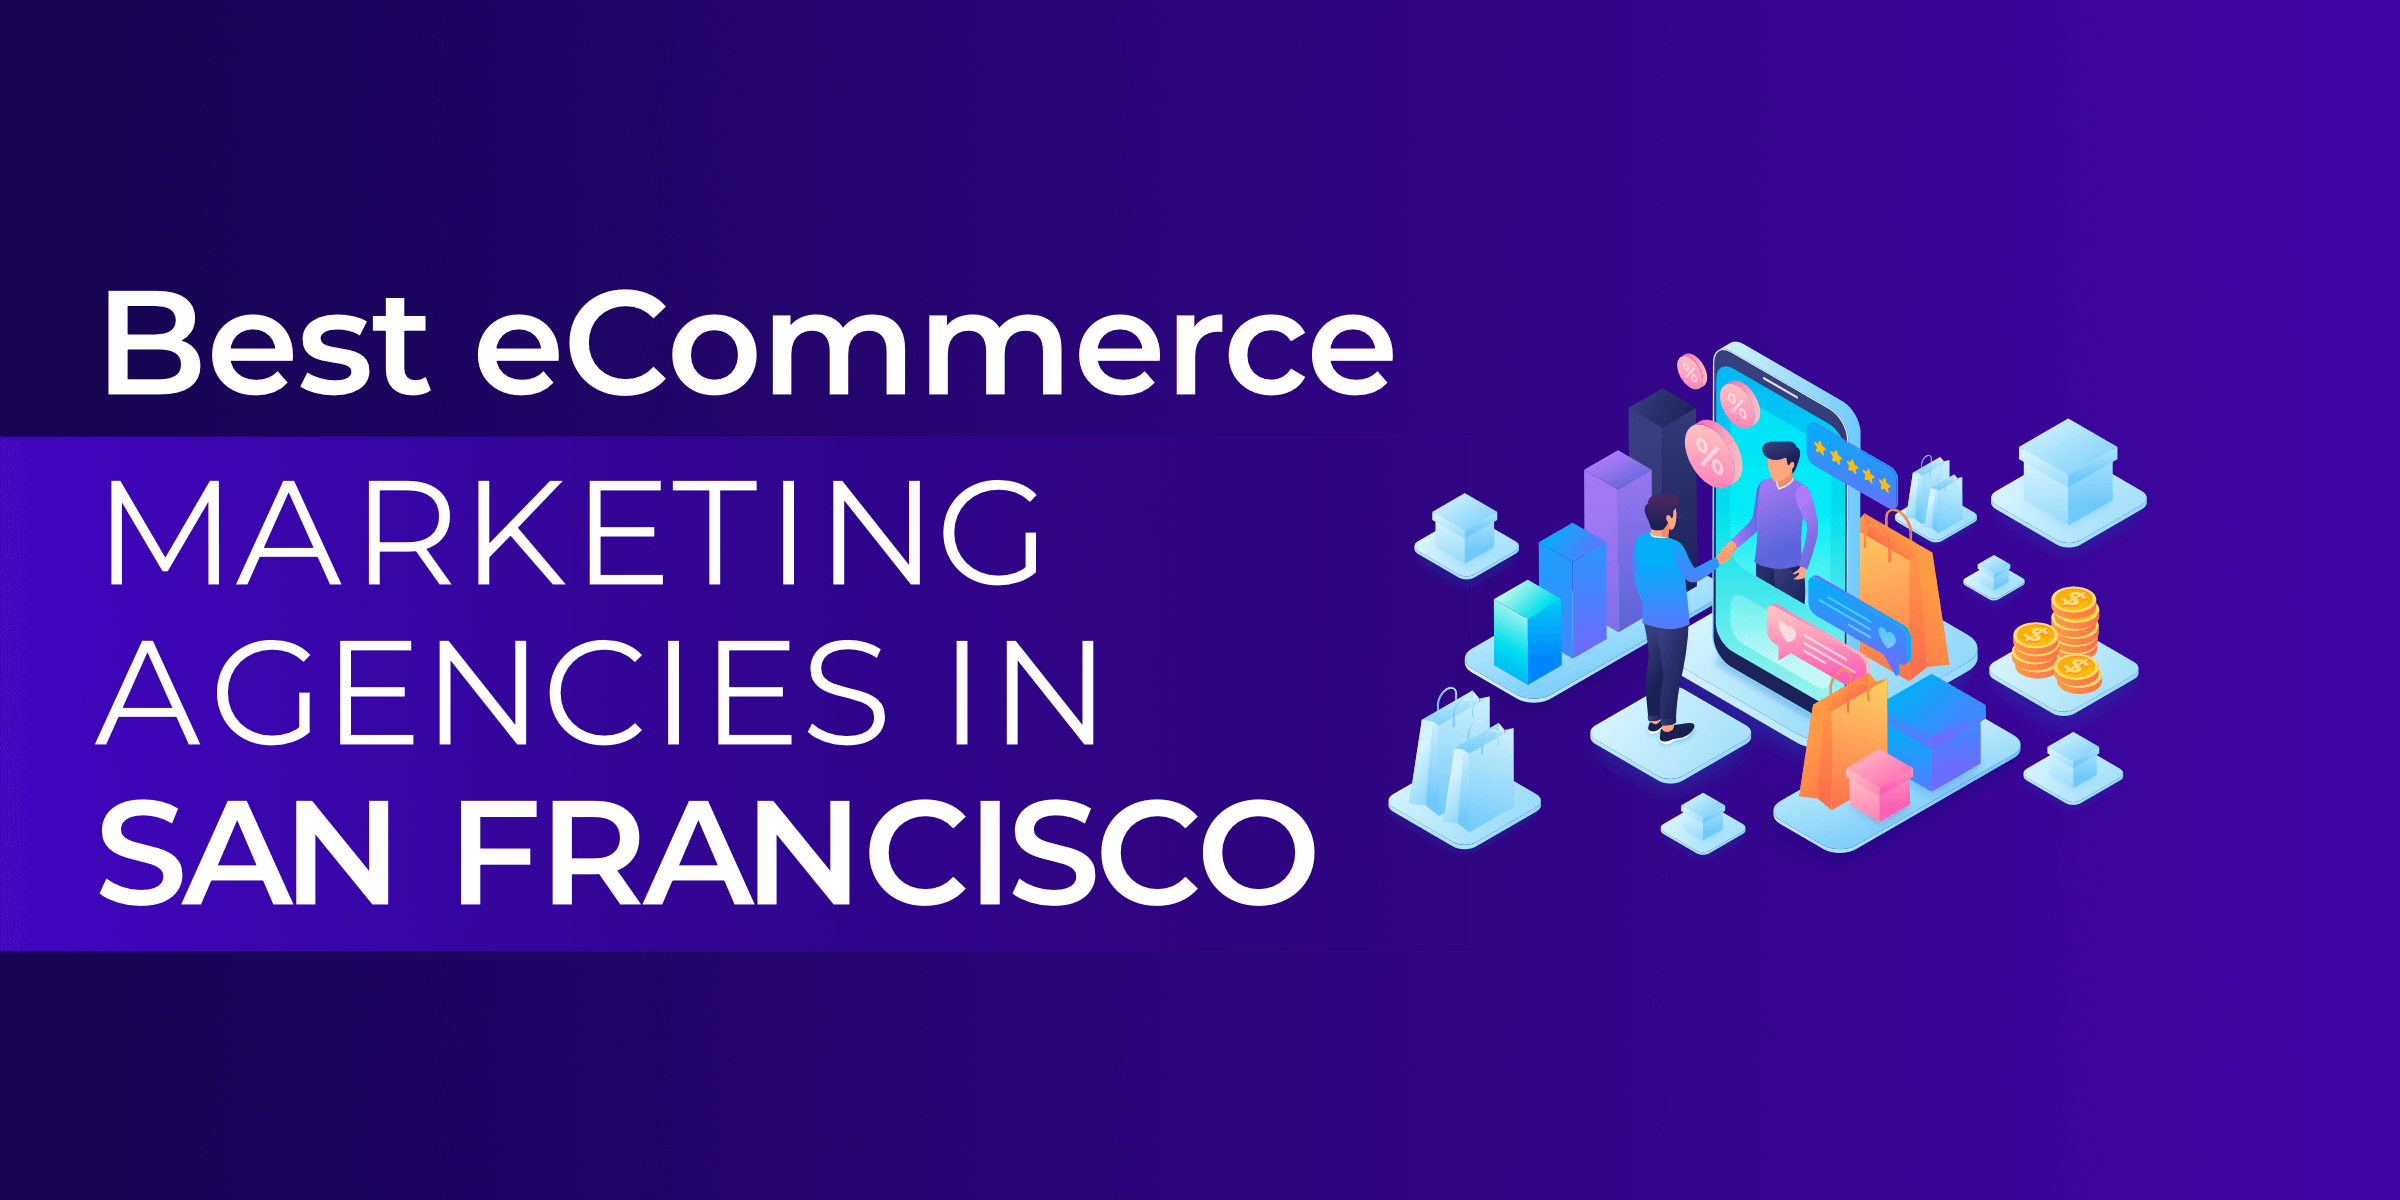 Best eCommerce Marketing Agencies in San Francisco